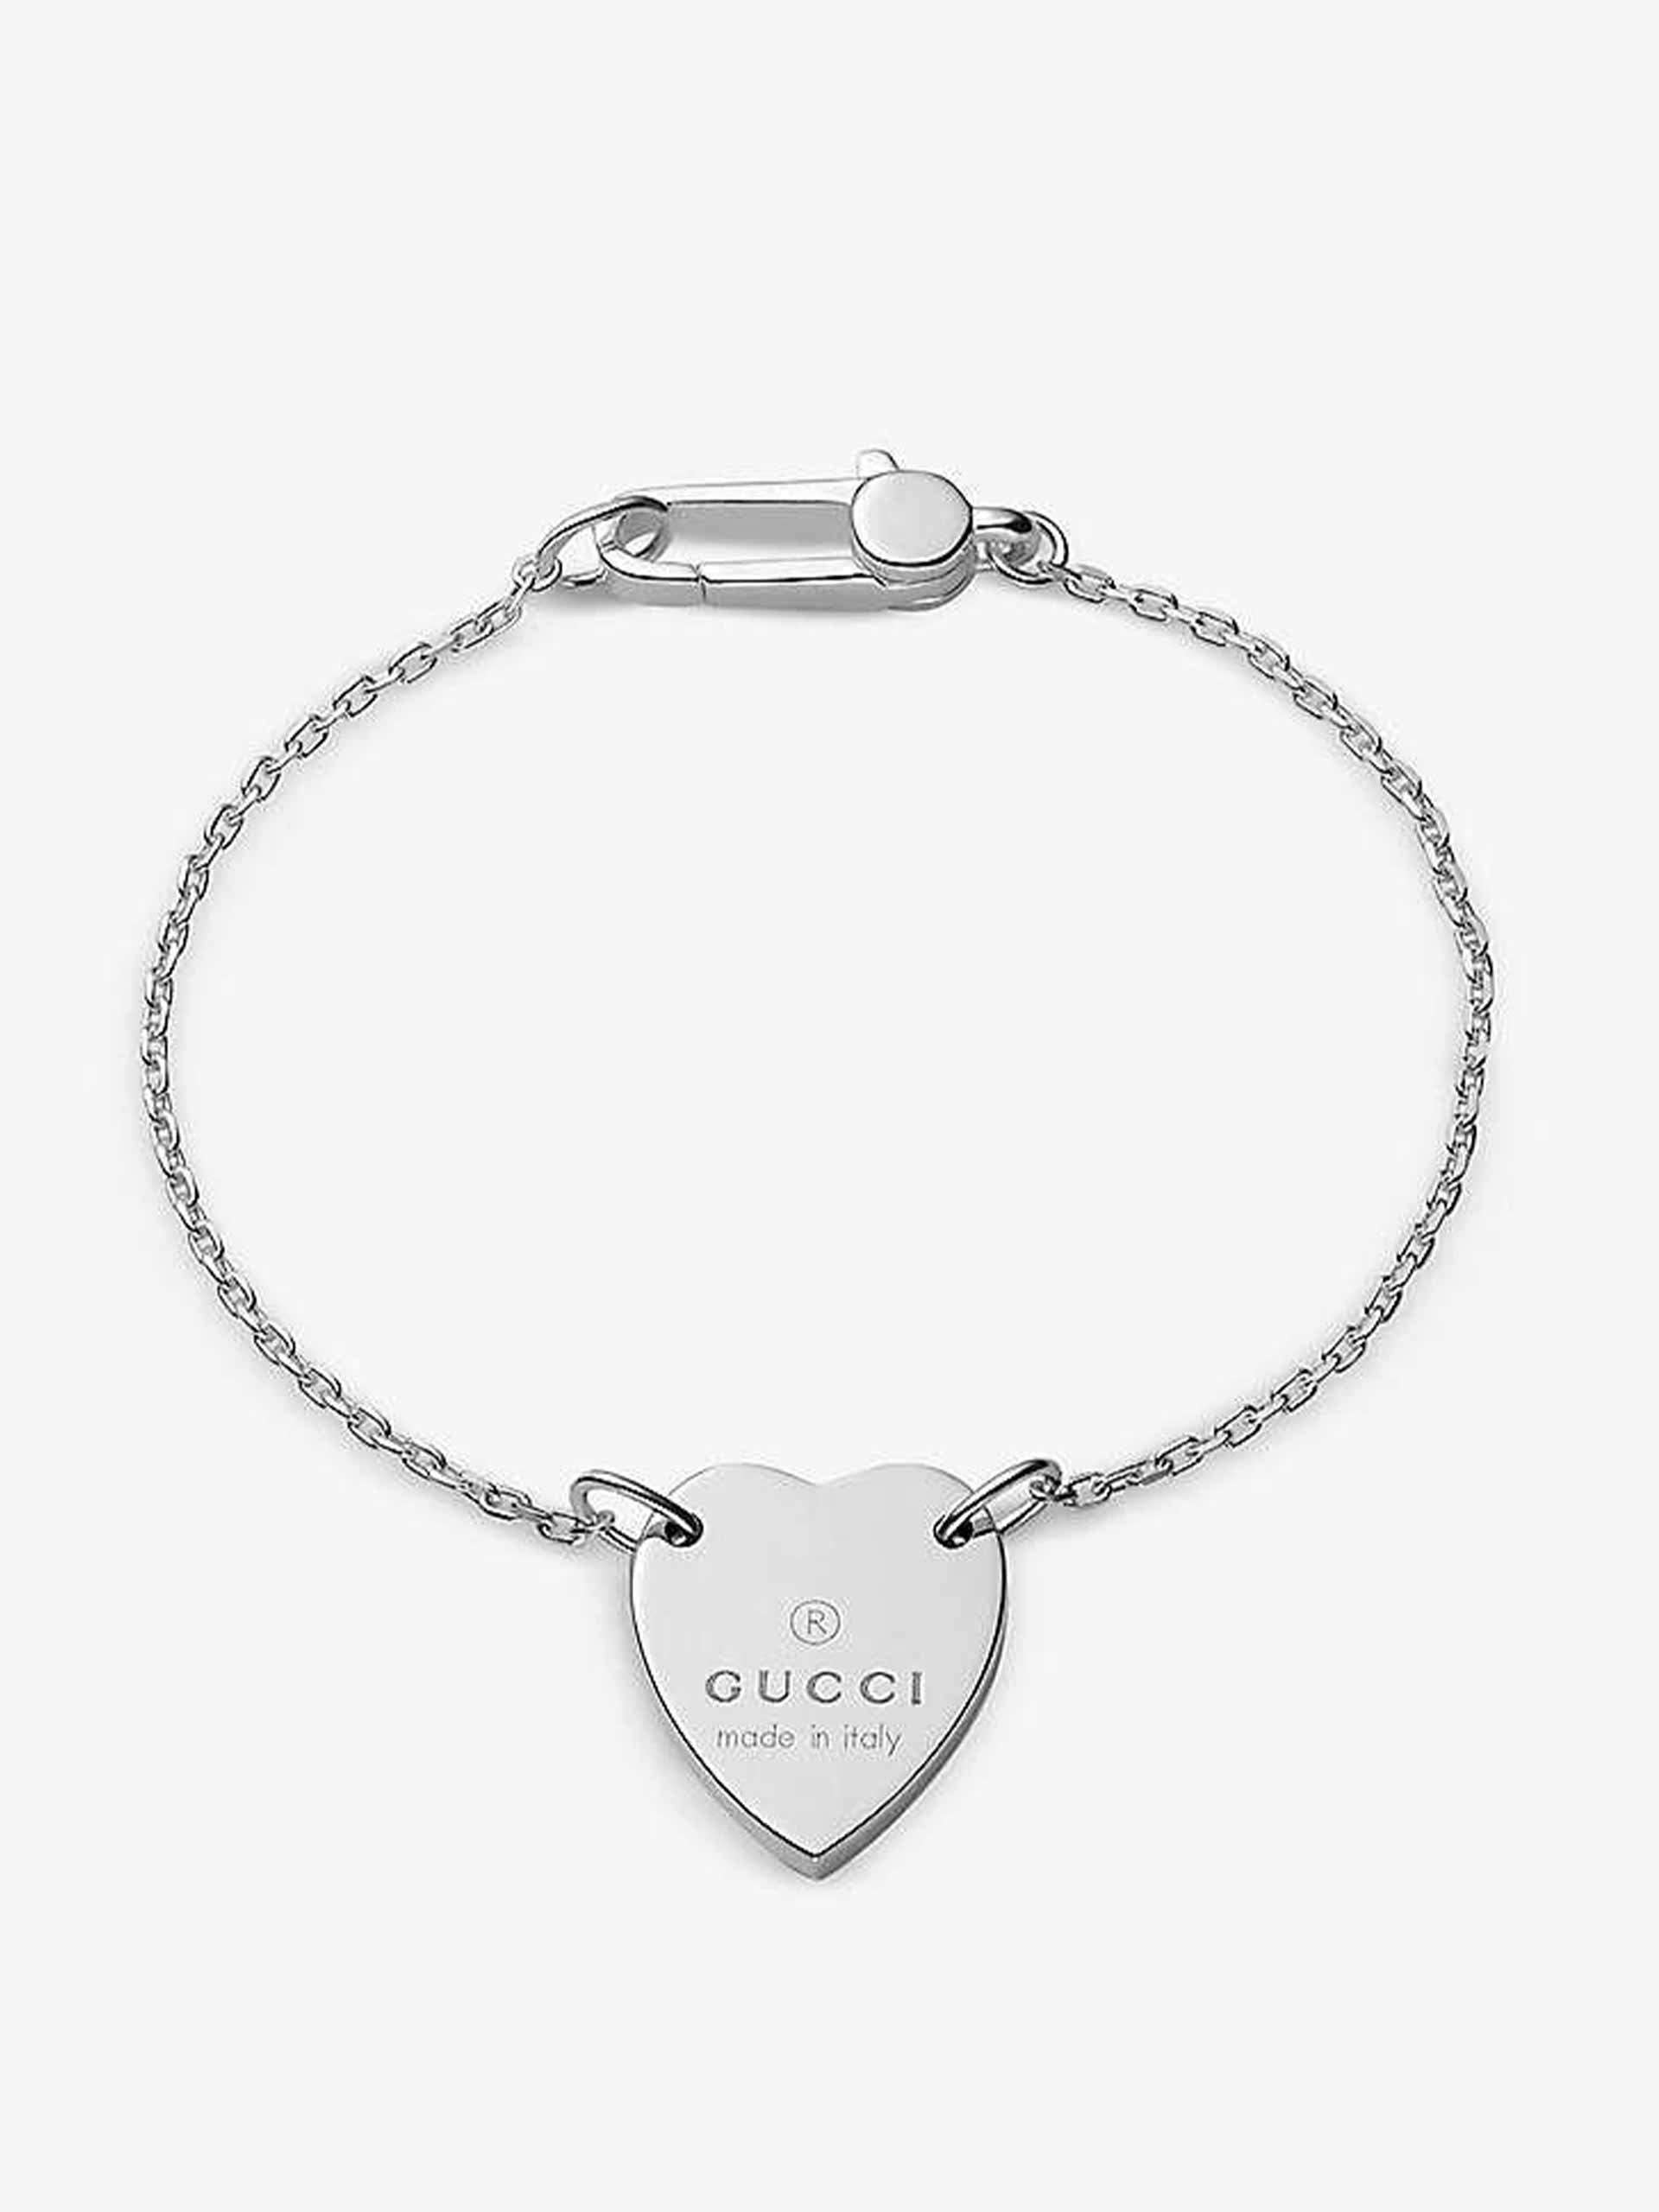 Trademark bracelet with heart pendant